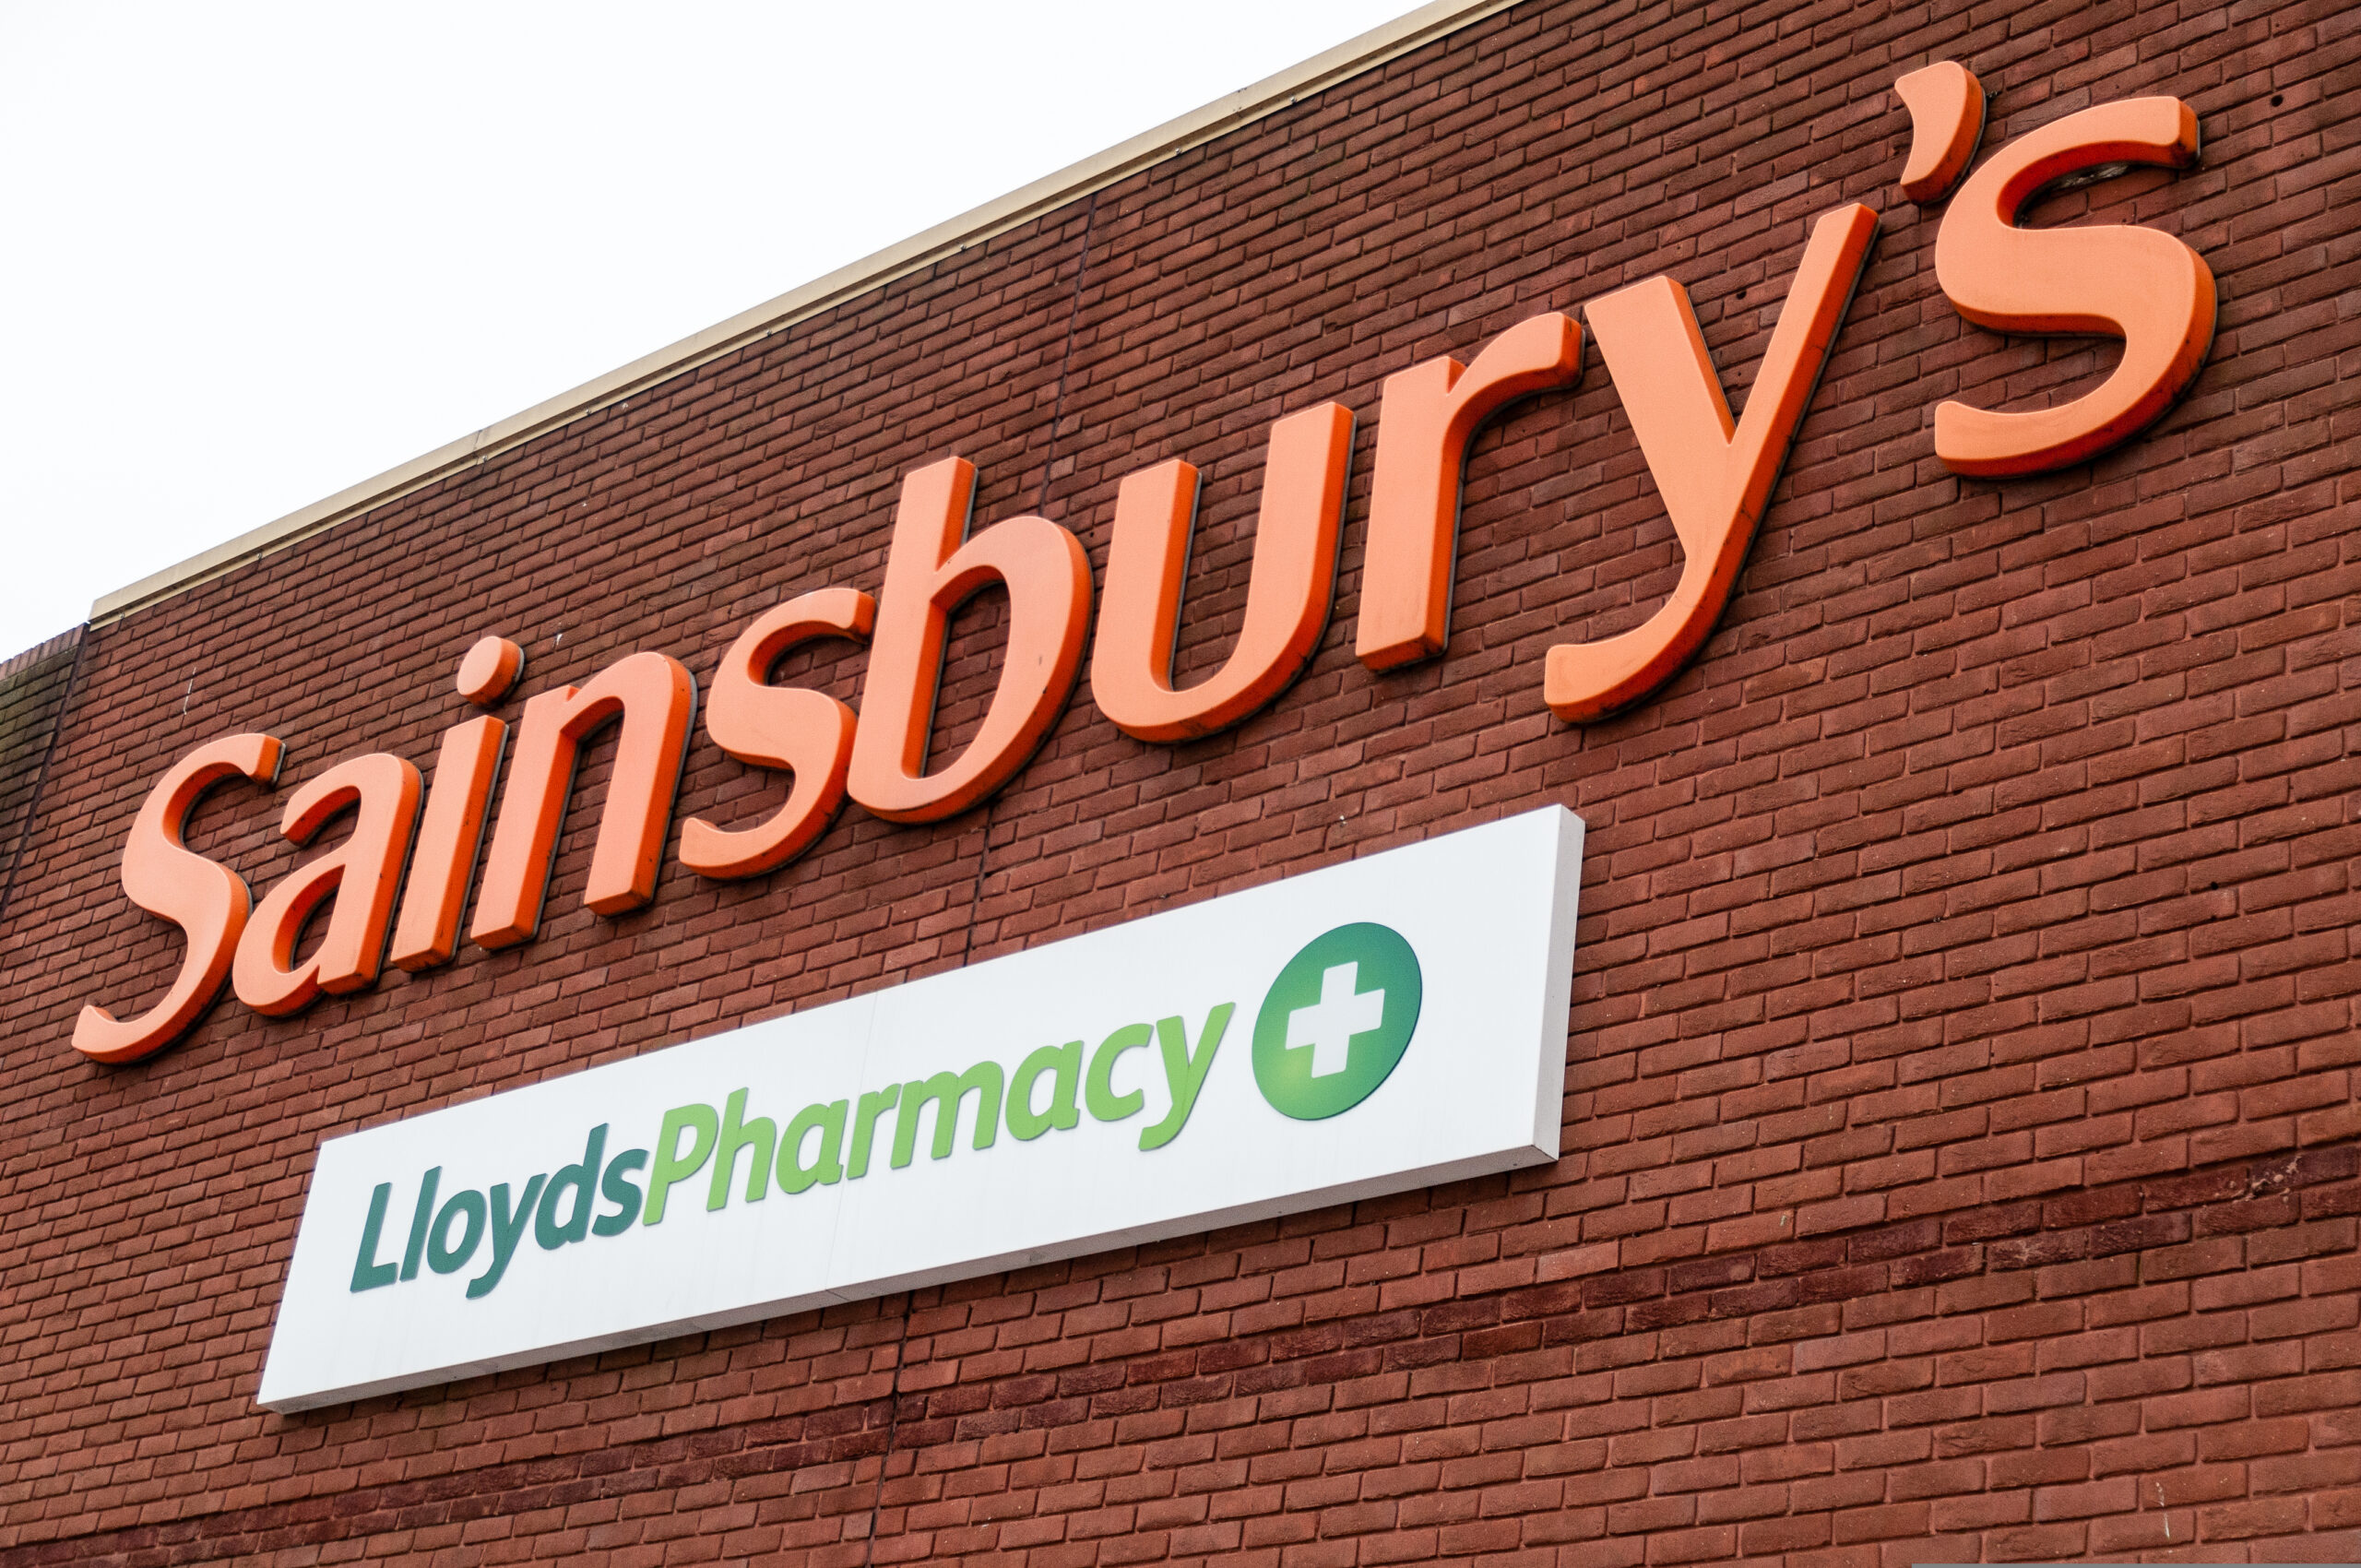 Lloydspharmacy x Sainsbury's